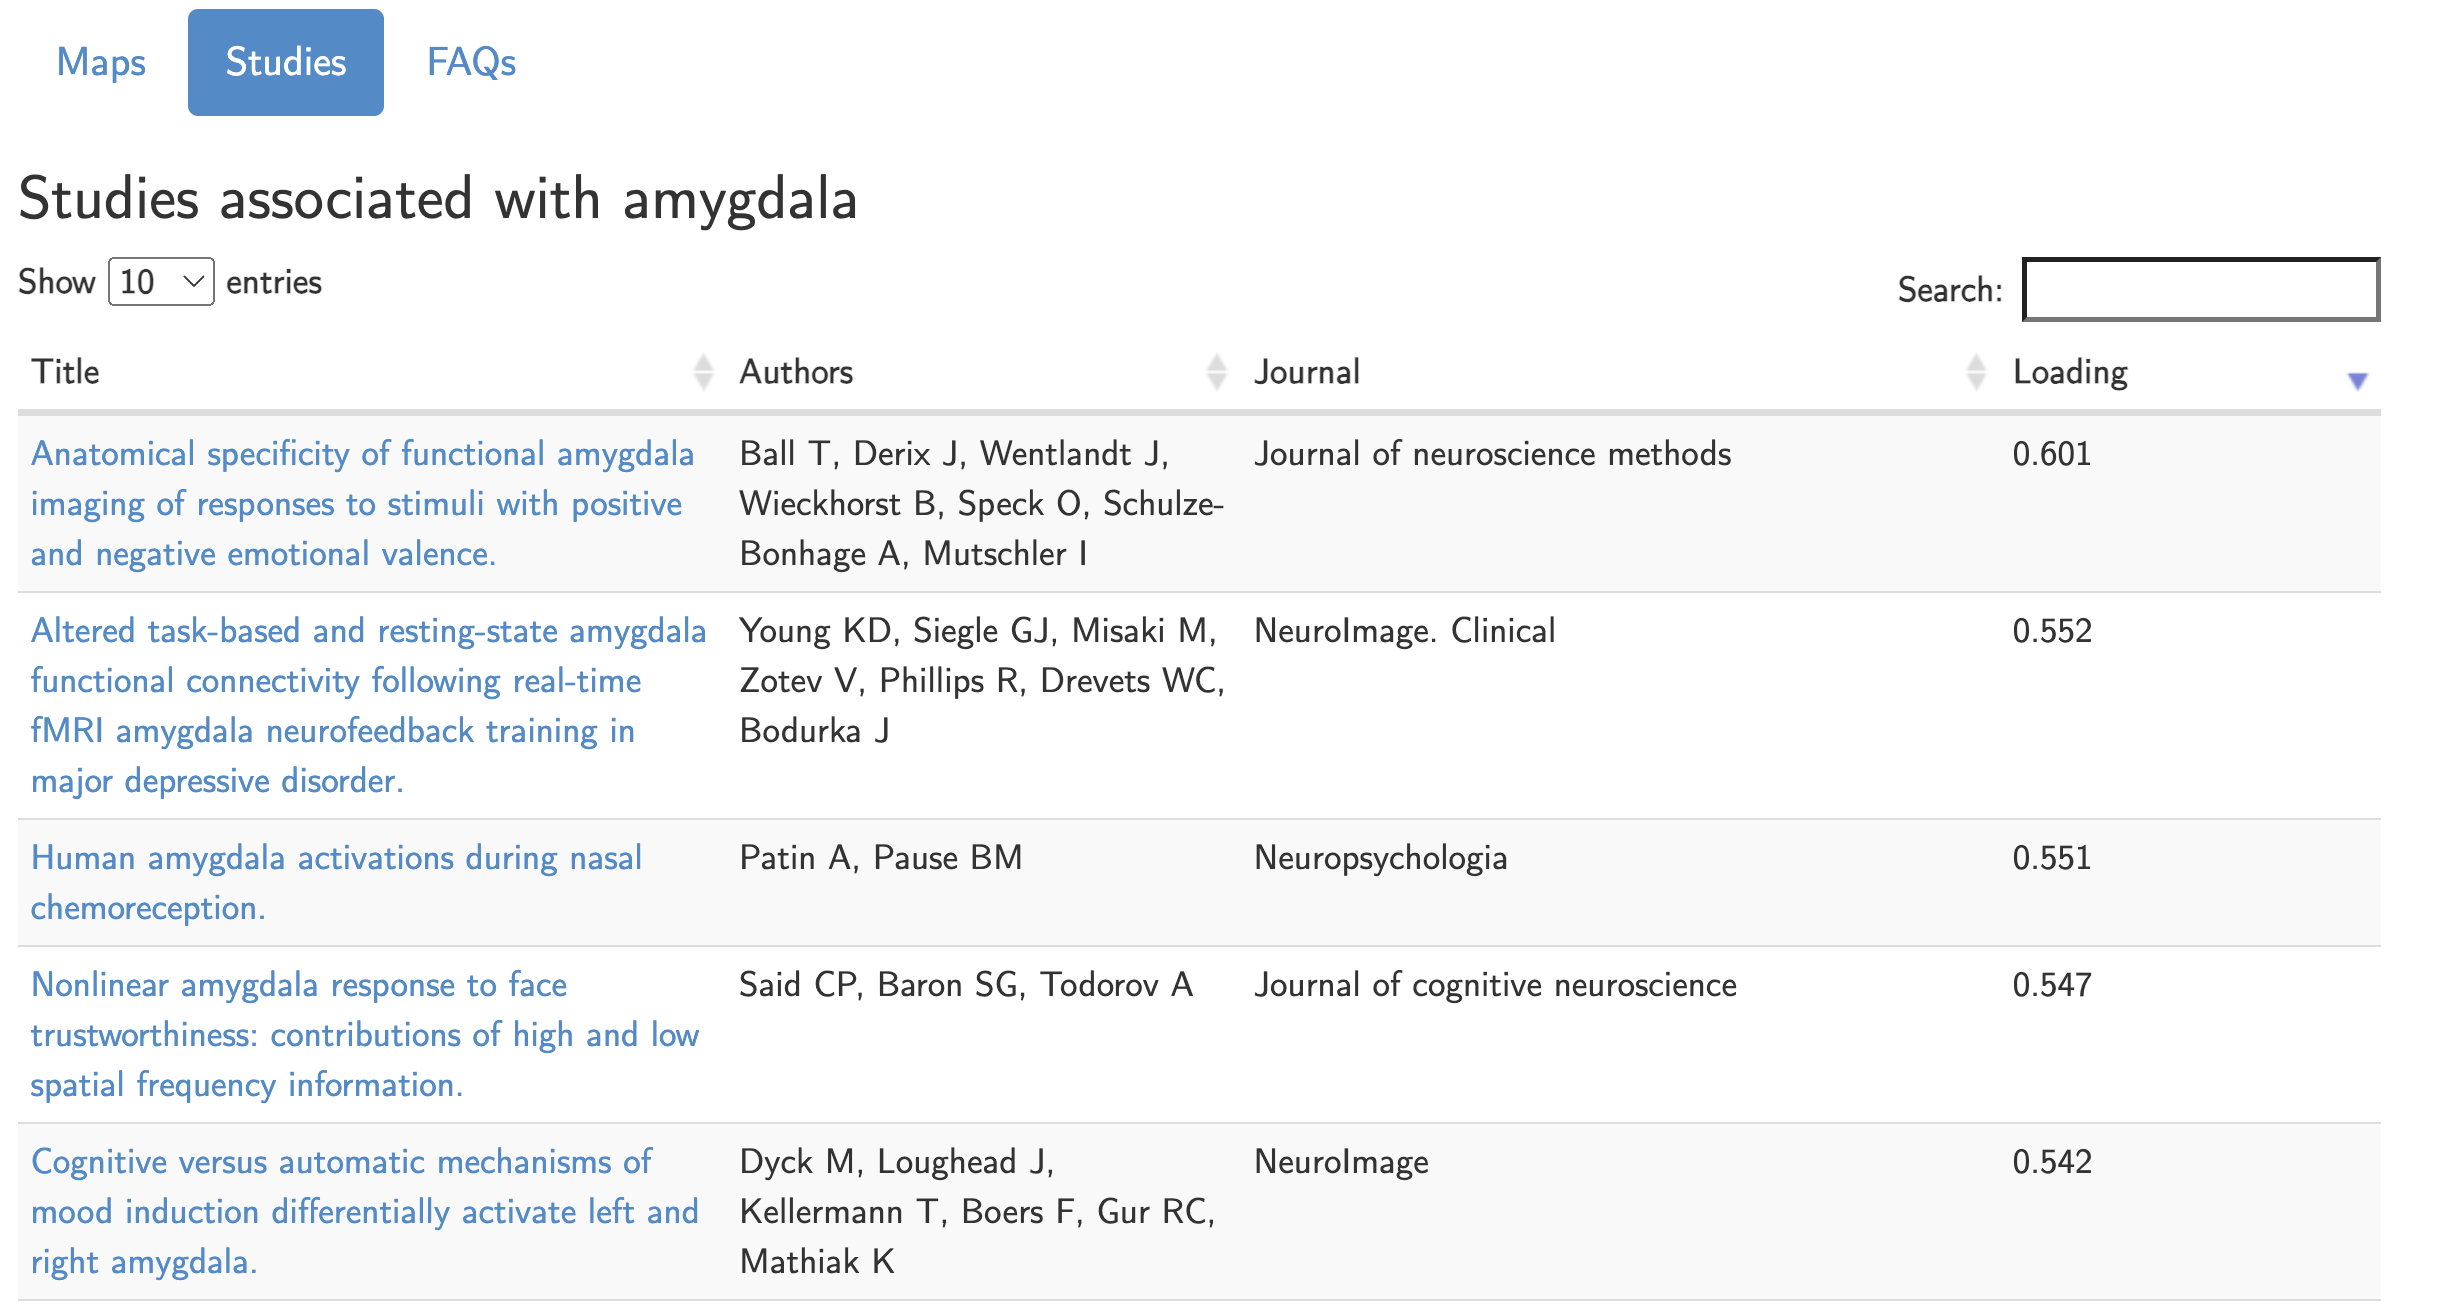 ../../_images/AppendixG_AmygdalaStudies.png